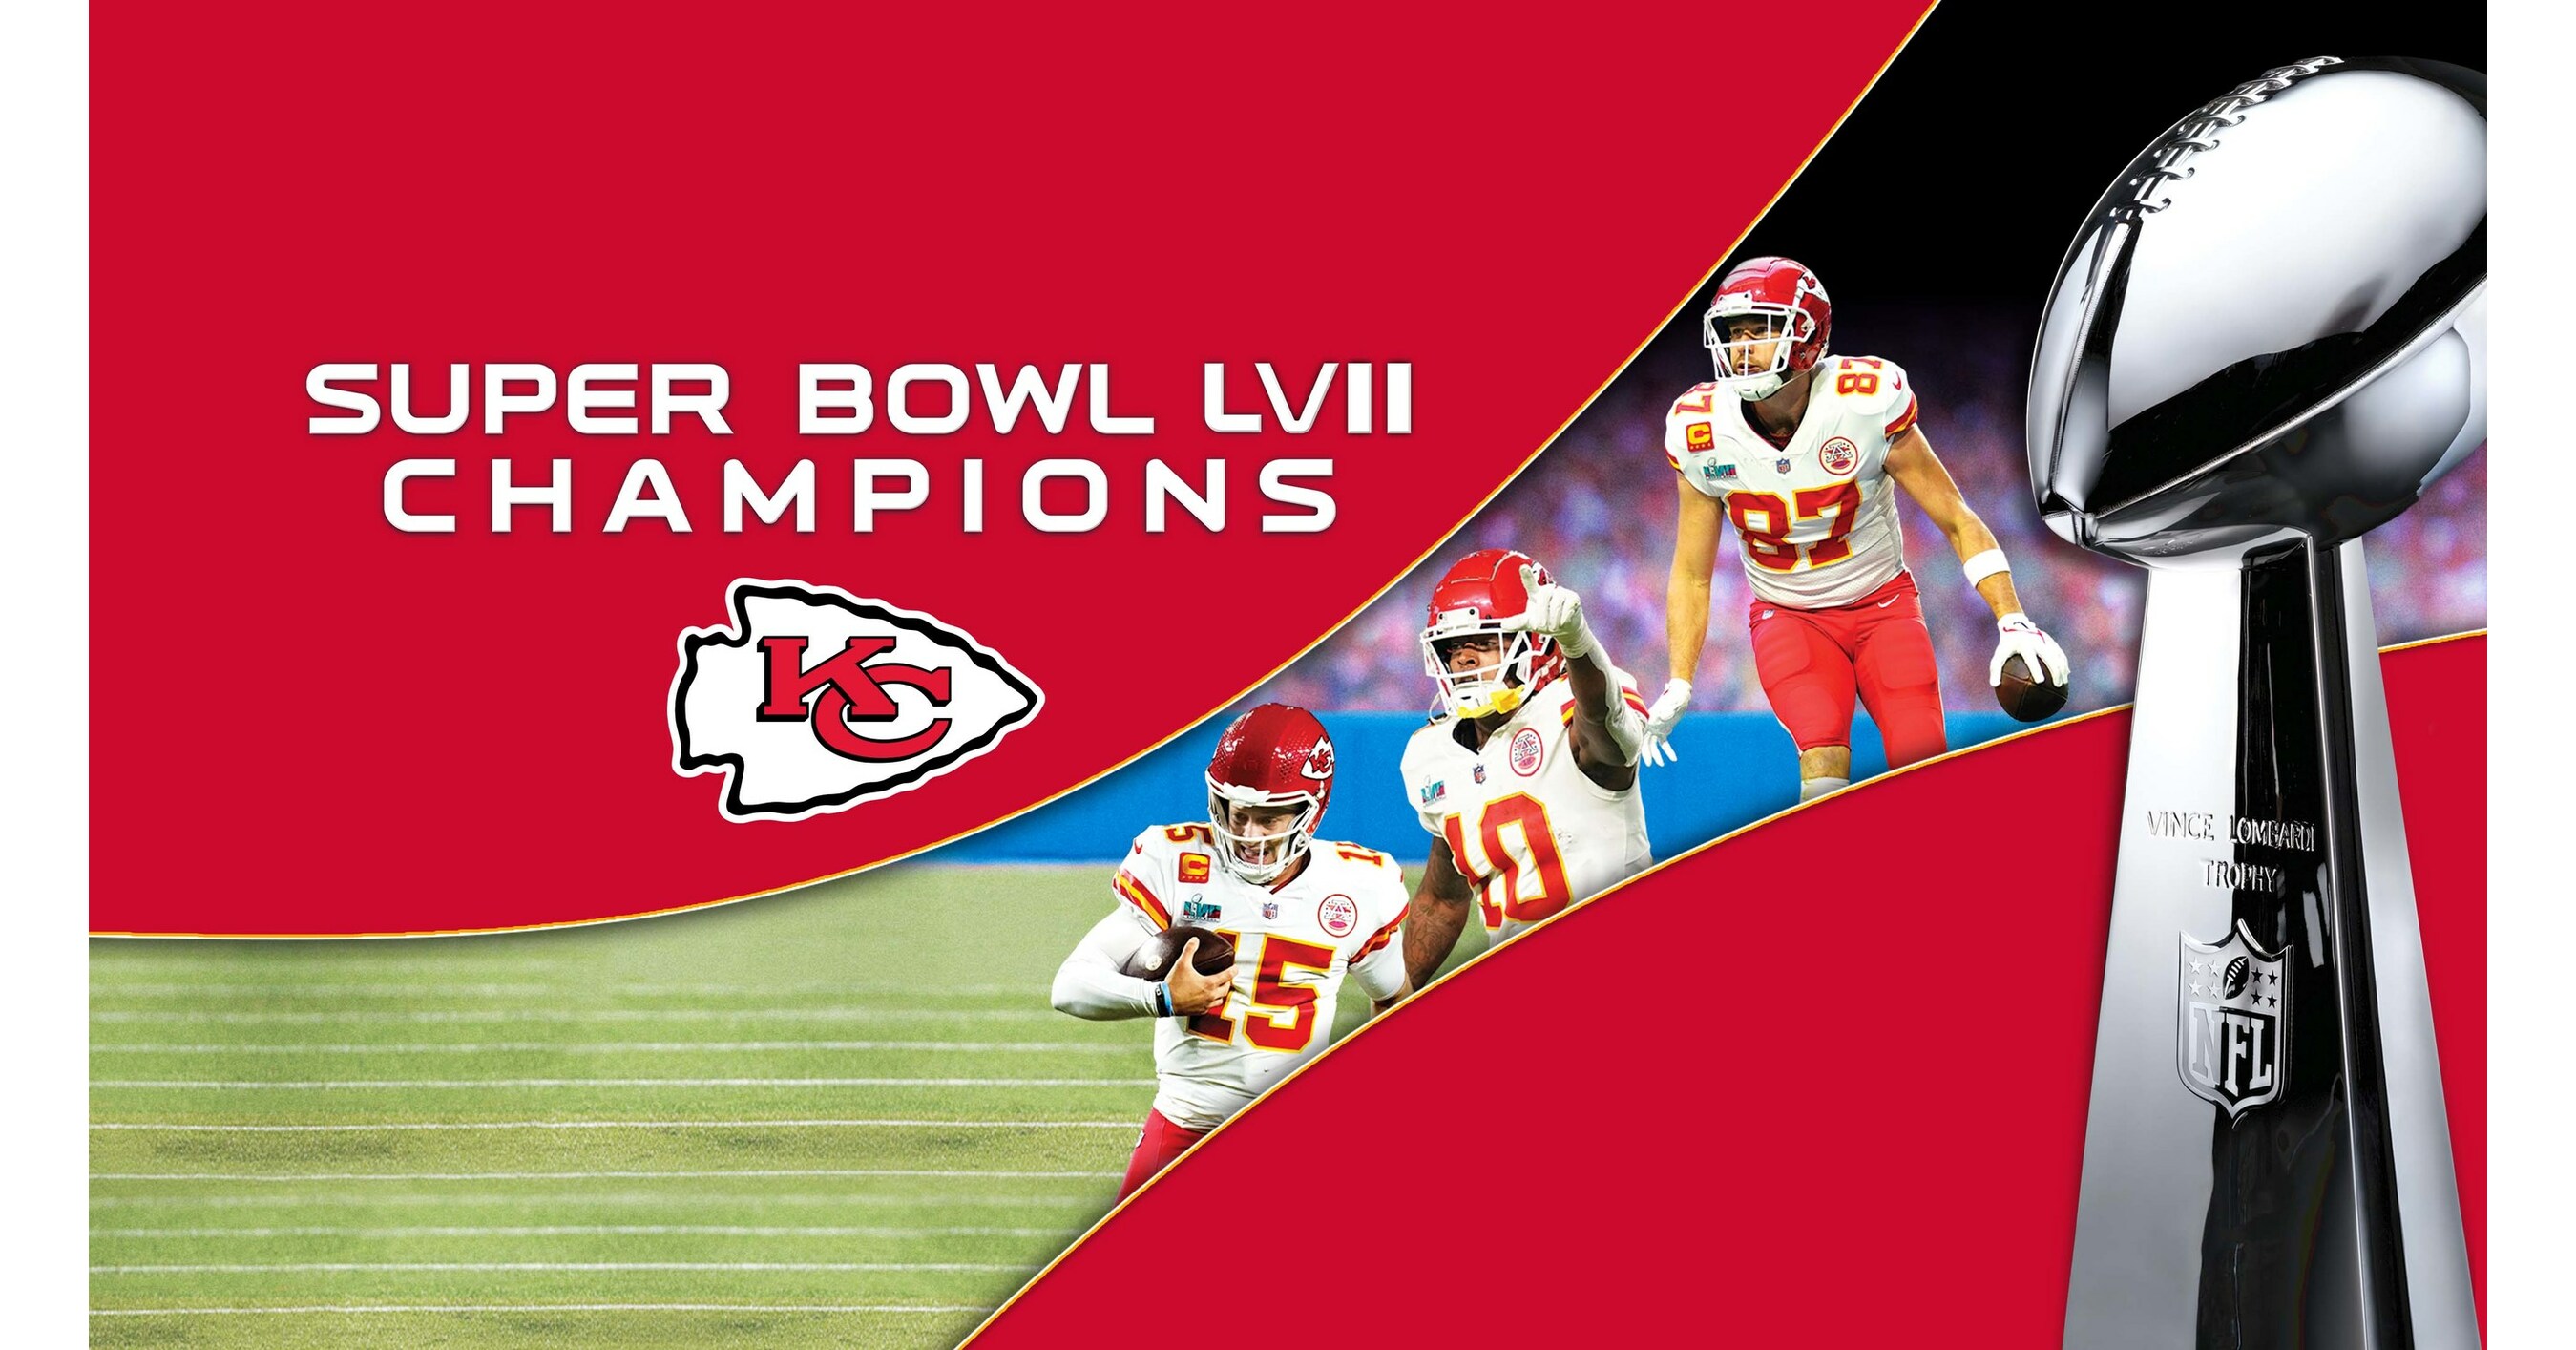  Super Bowl LIV Champions: Kansas City Chiefs [Blu-ray